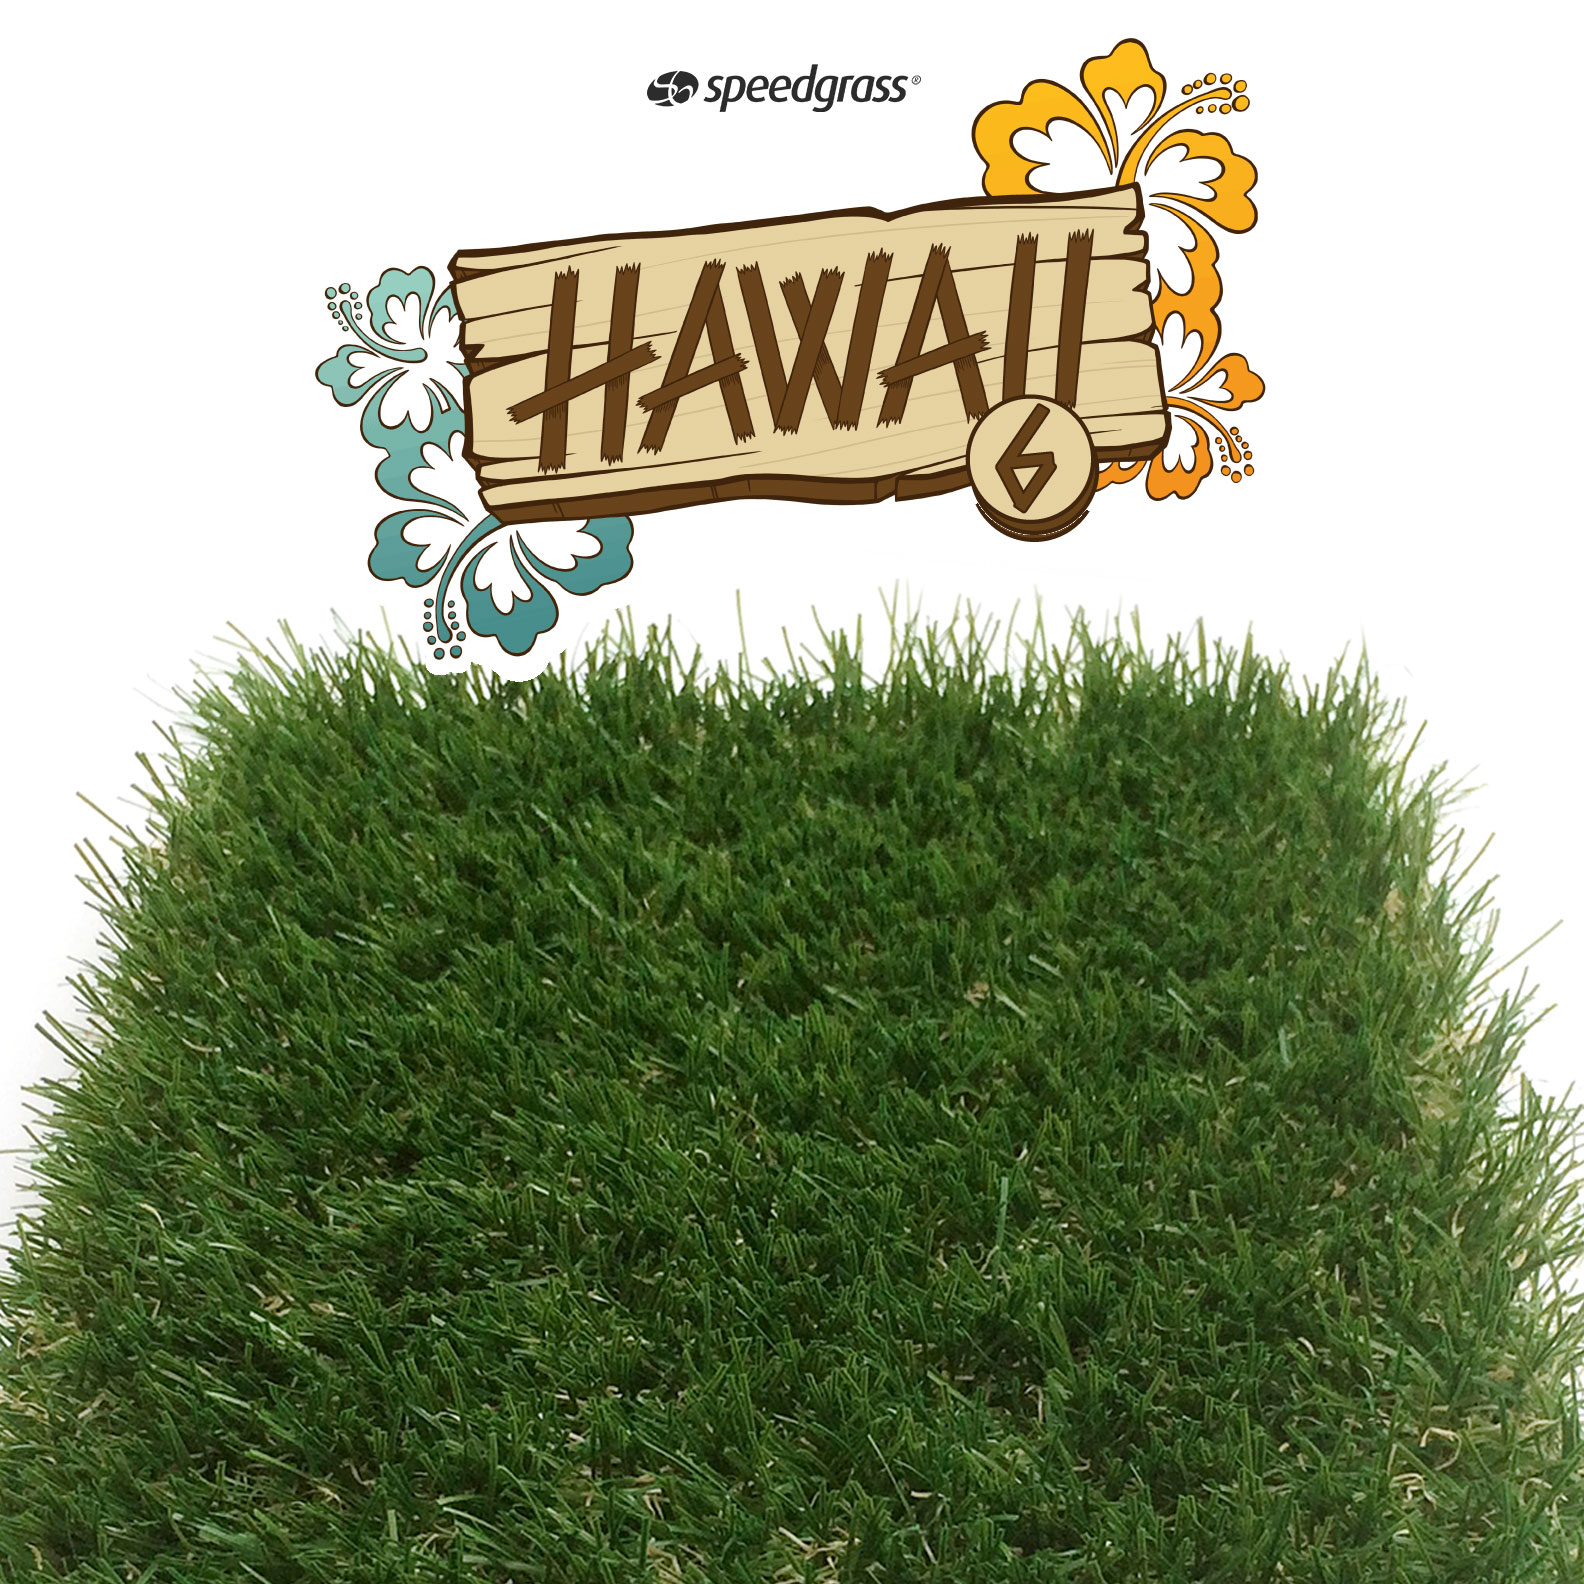 Césped artificial Hawaii by Speedgrass